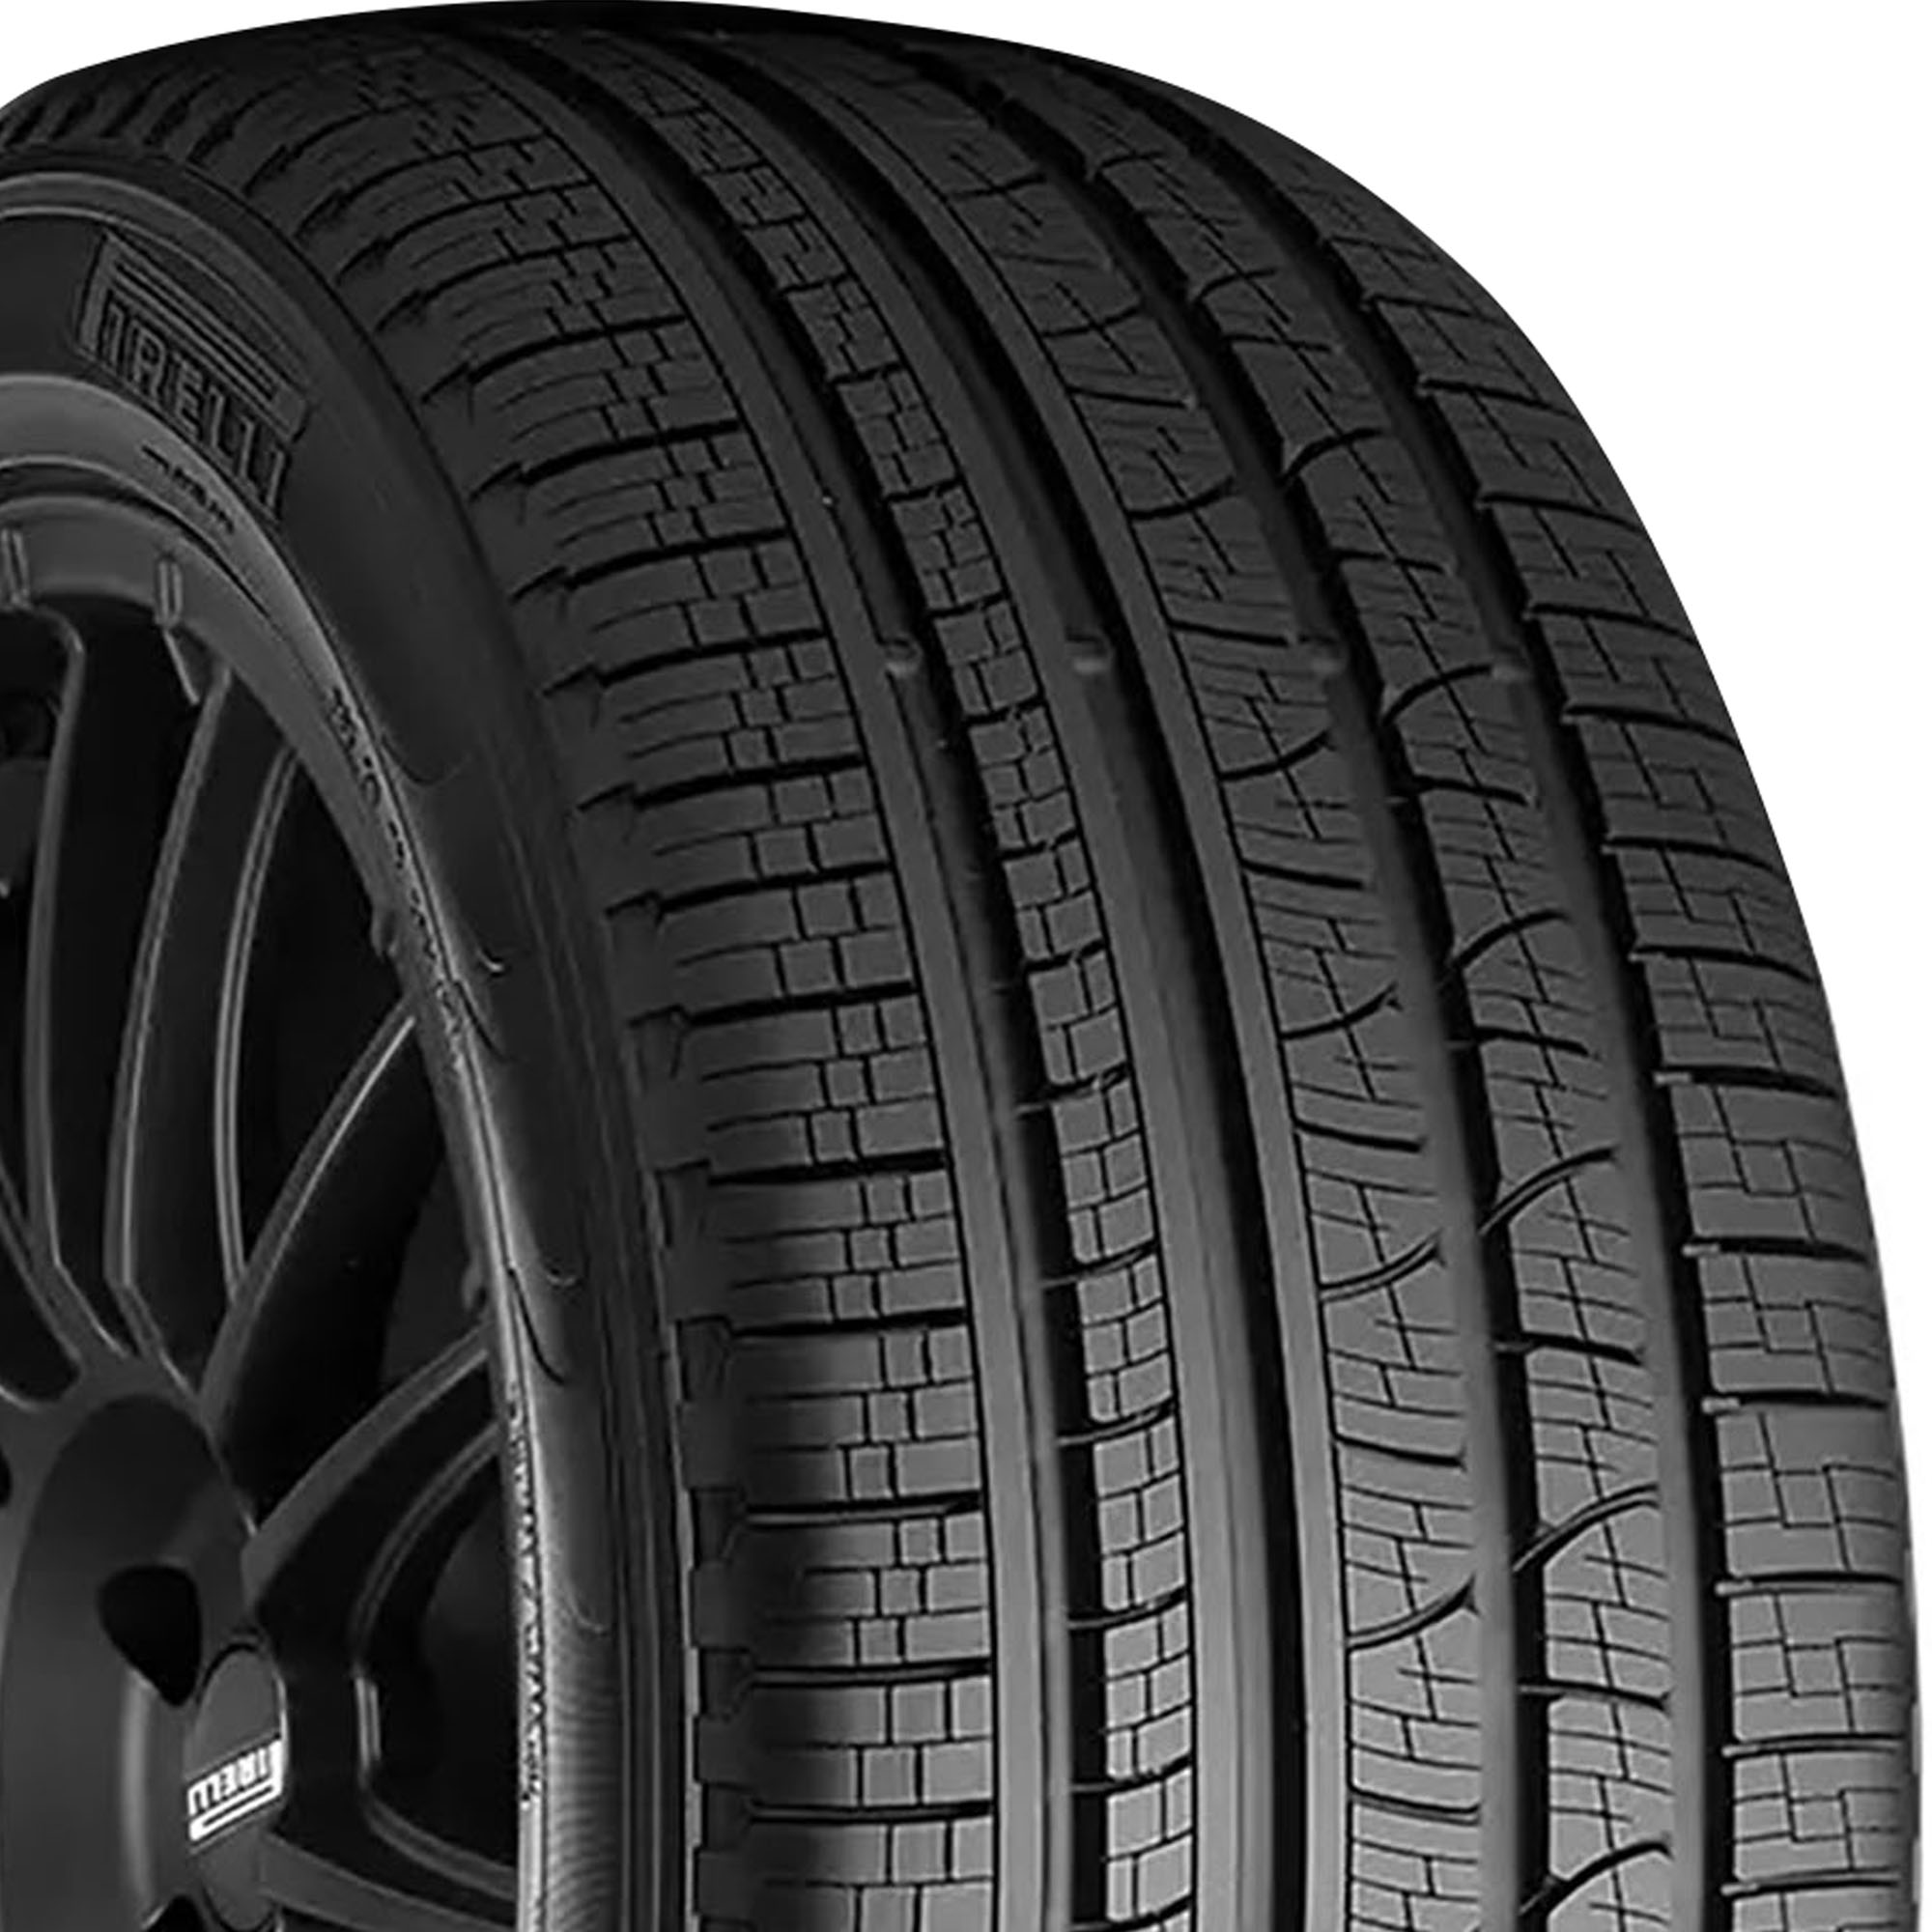 All Scorpion eBay 215 Pirelli 16 Season Verde Tires | - 65 2 New 2156516 215/65r16